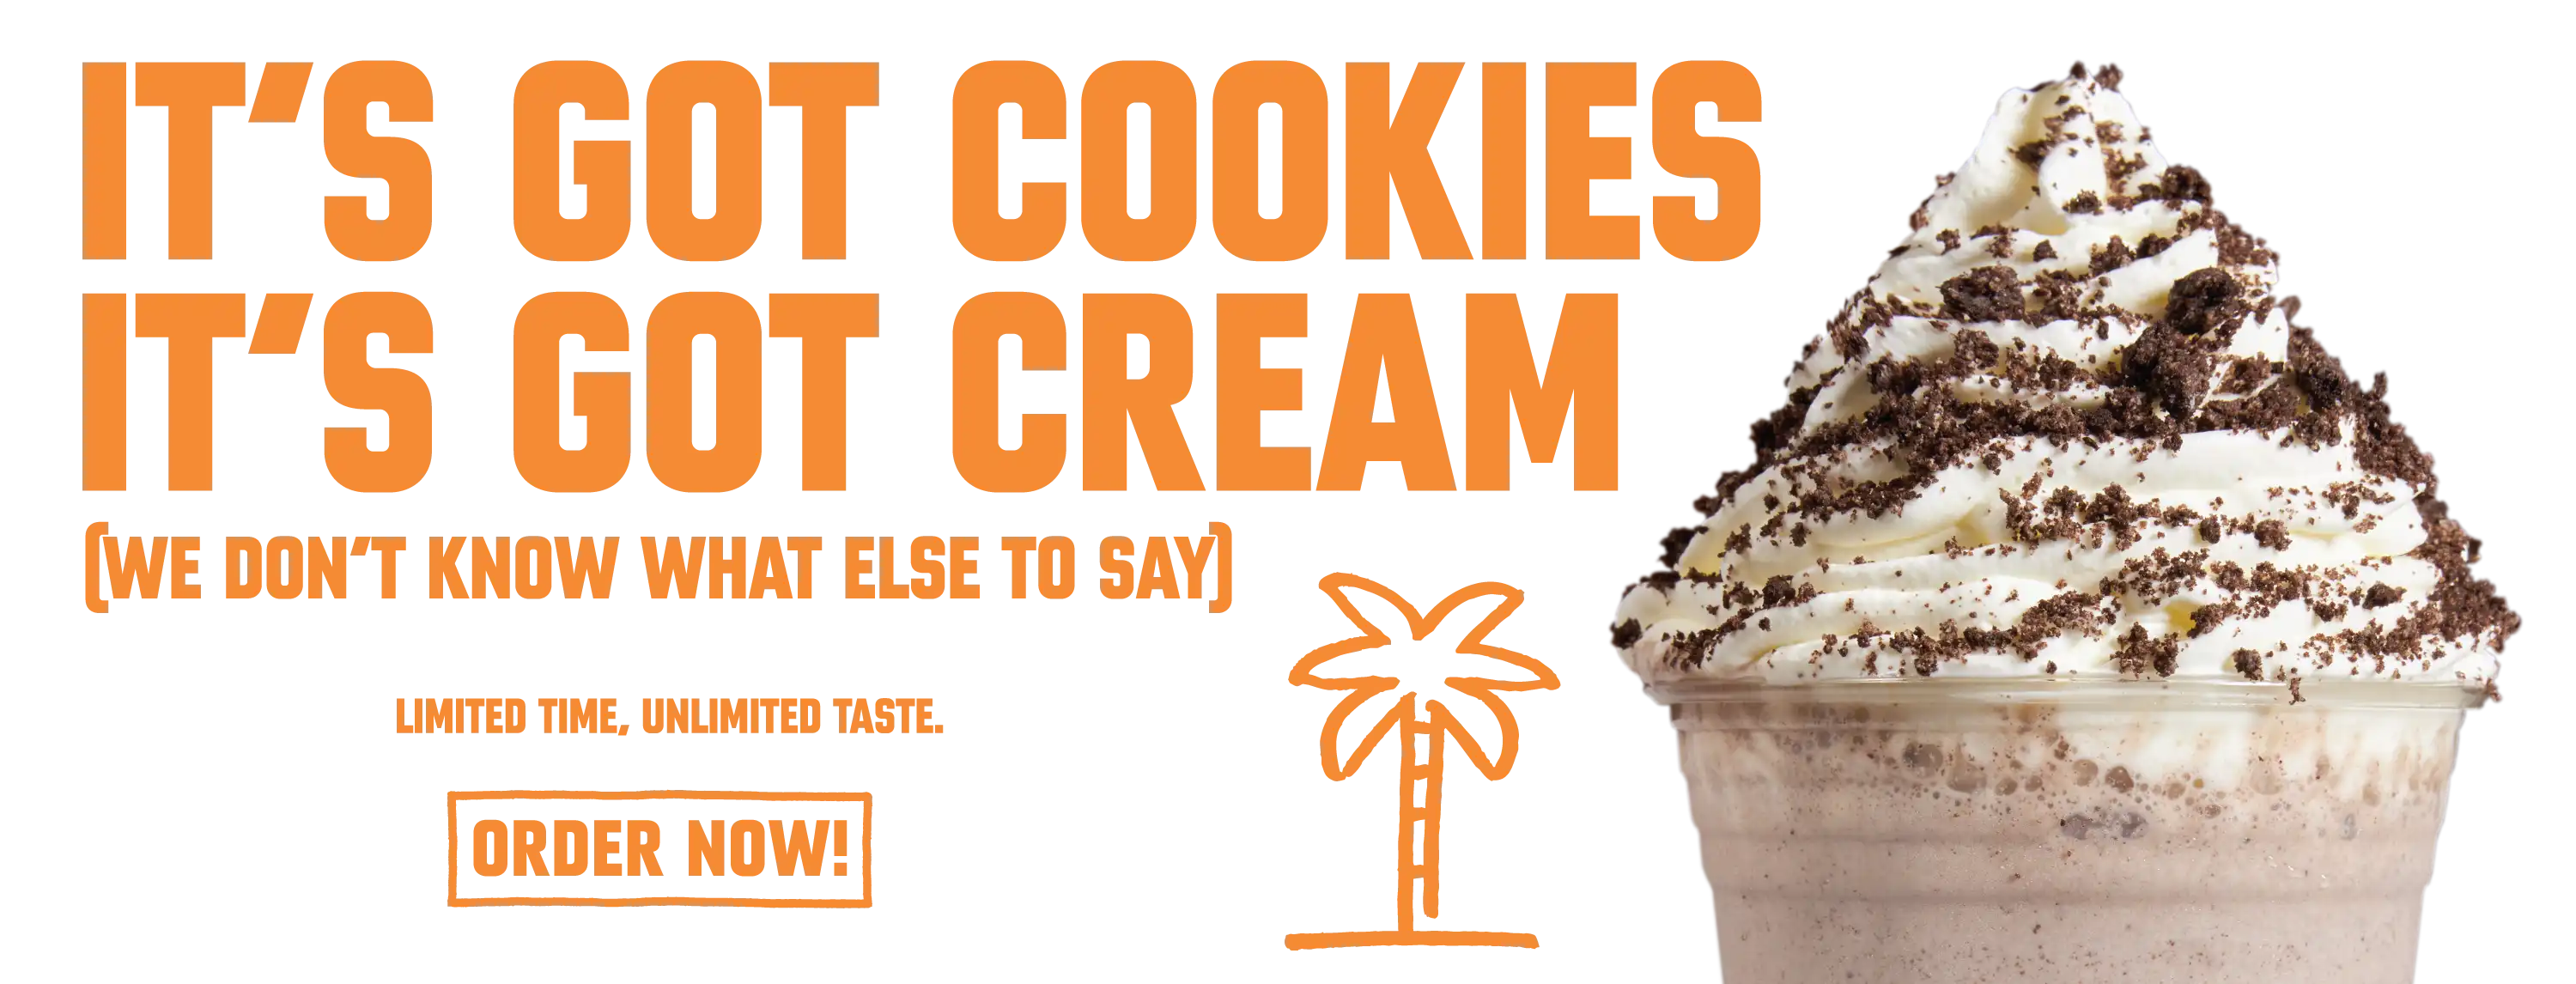 Cookies and Cream Shake - Desktop Version